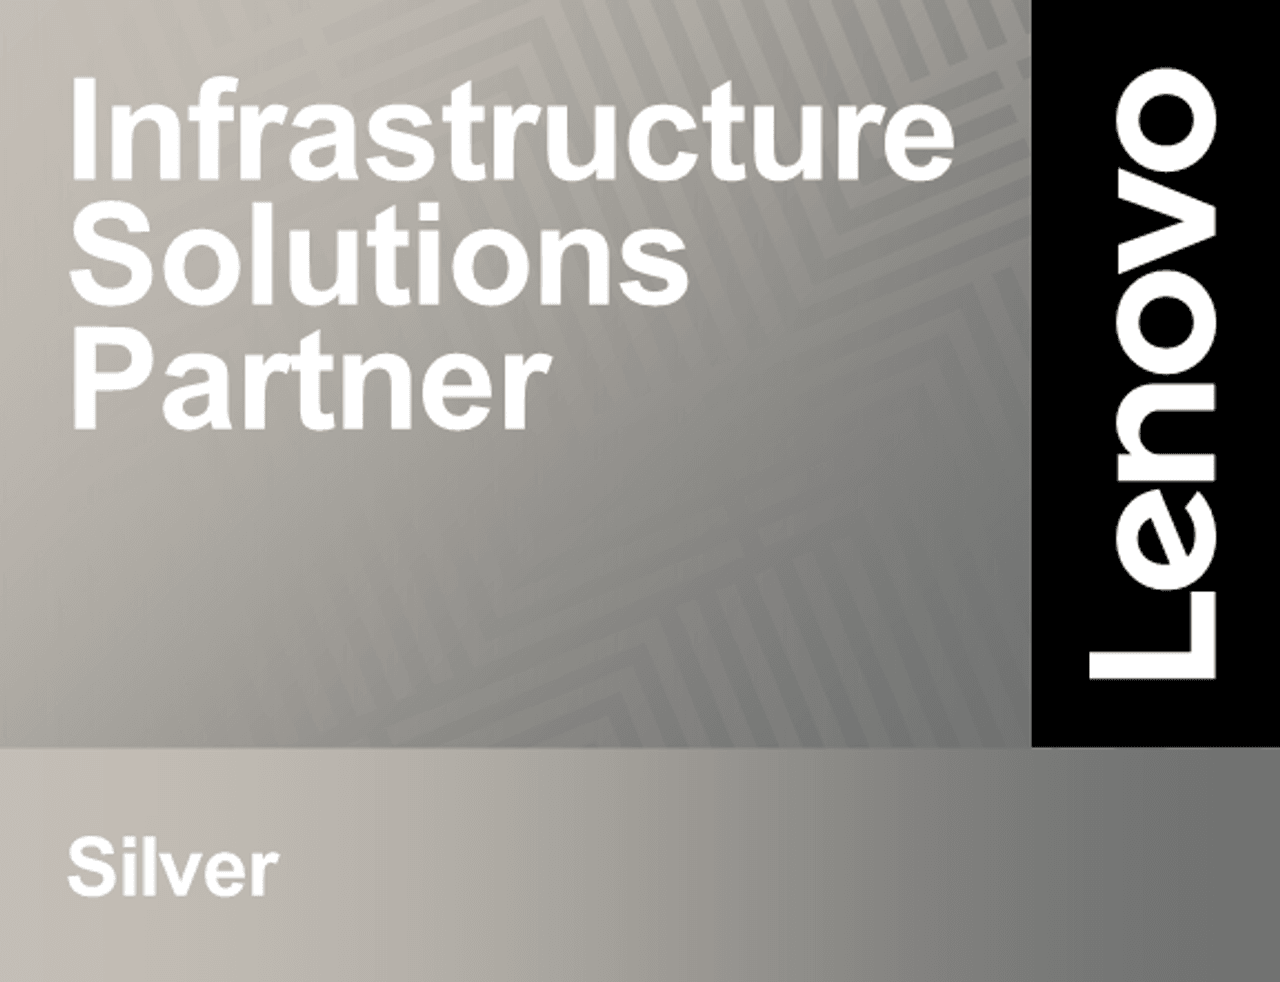 Lenovo Partner Emblem - Infrastructure Solutions Partner - Silver.png - ©ARTADA GmbH